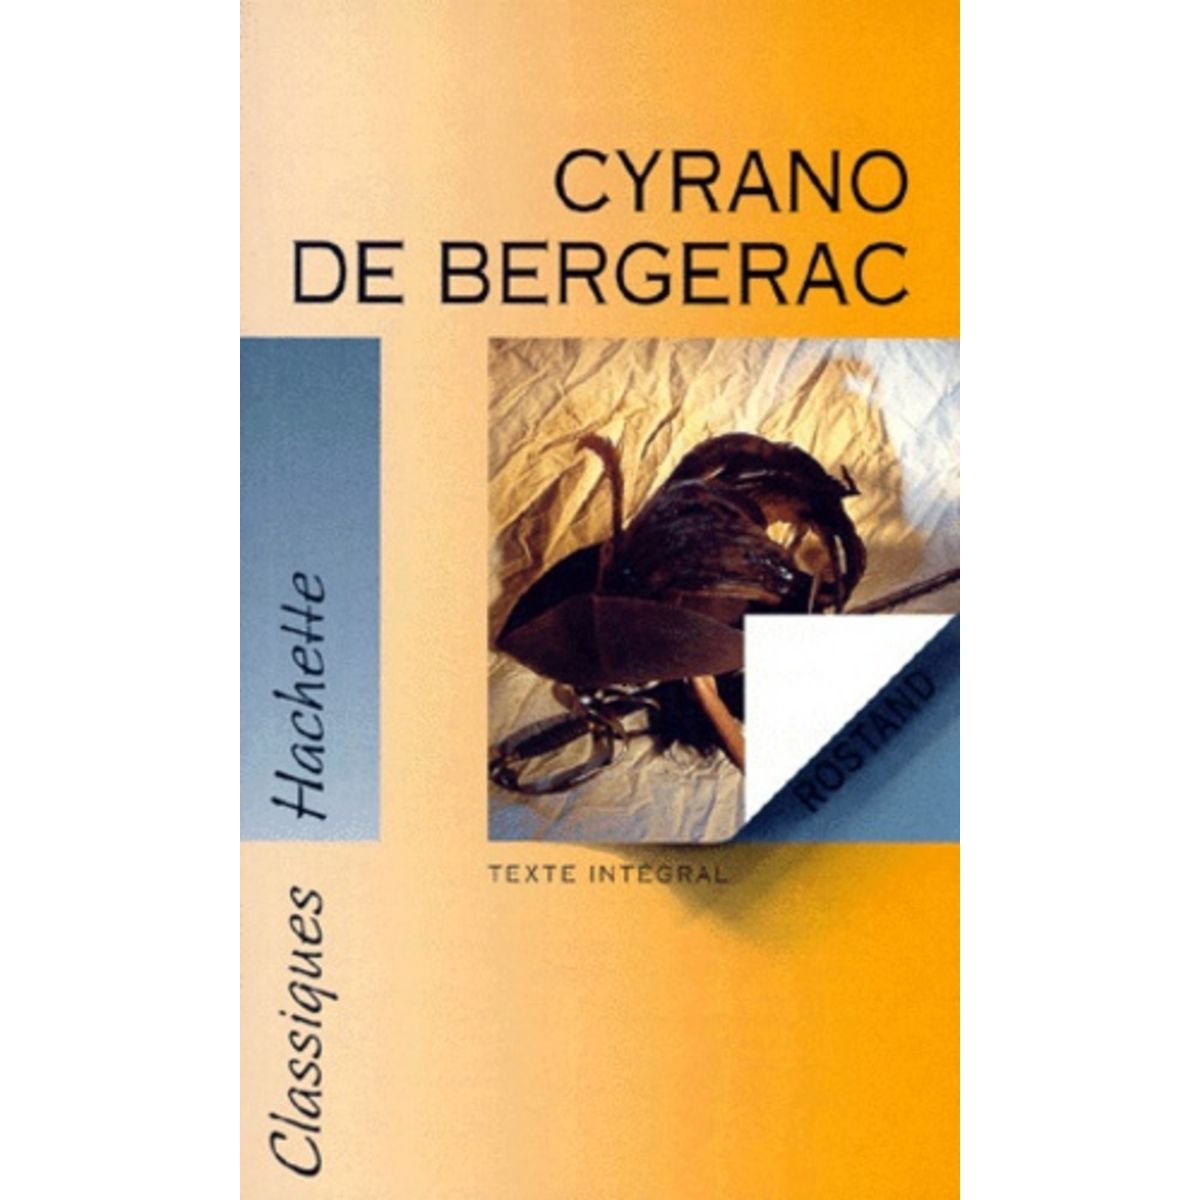  CYRANO DE BERGERAC. COMEDIE HEROIQUE, TEXTE INTEGRAL, Rostand Edmond